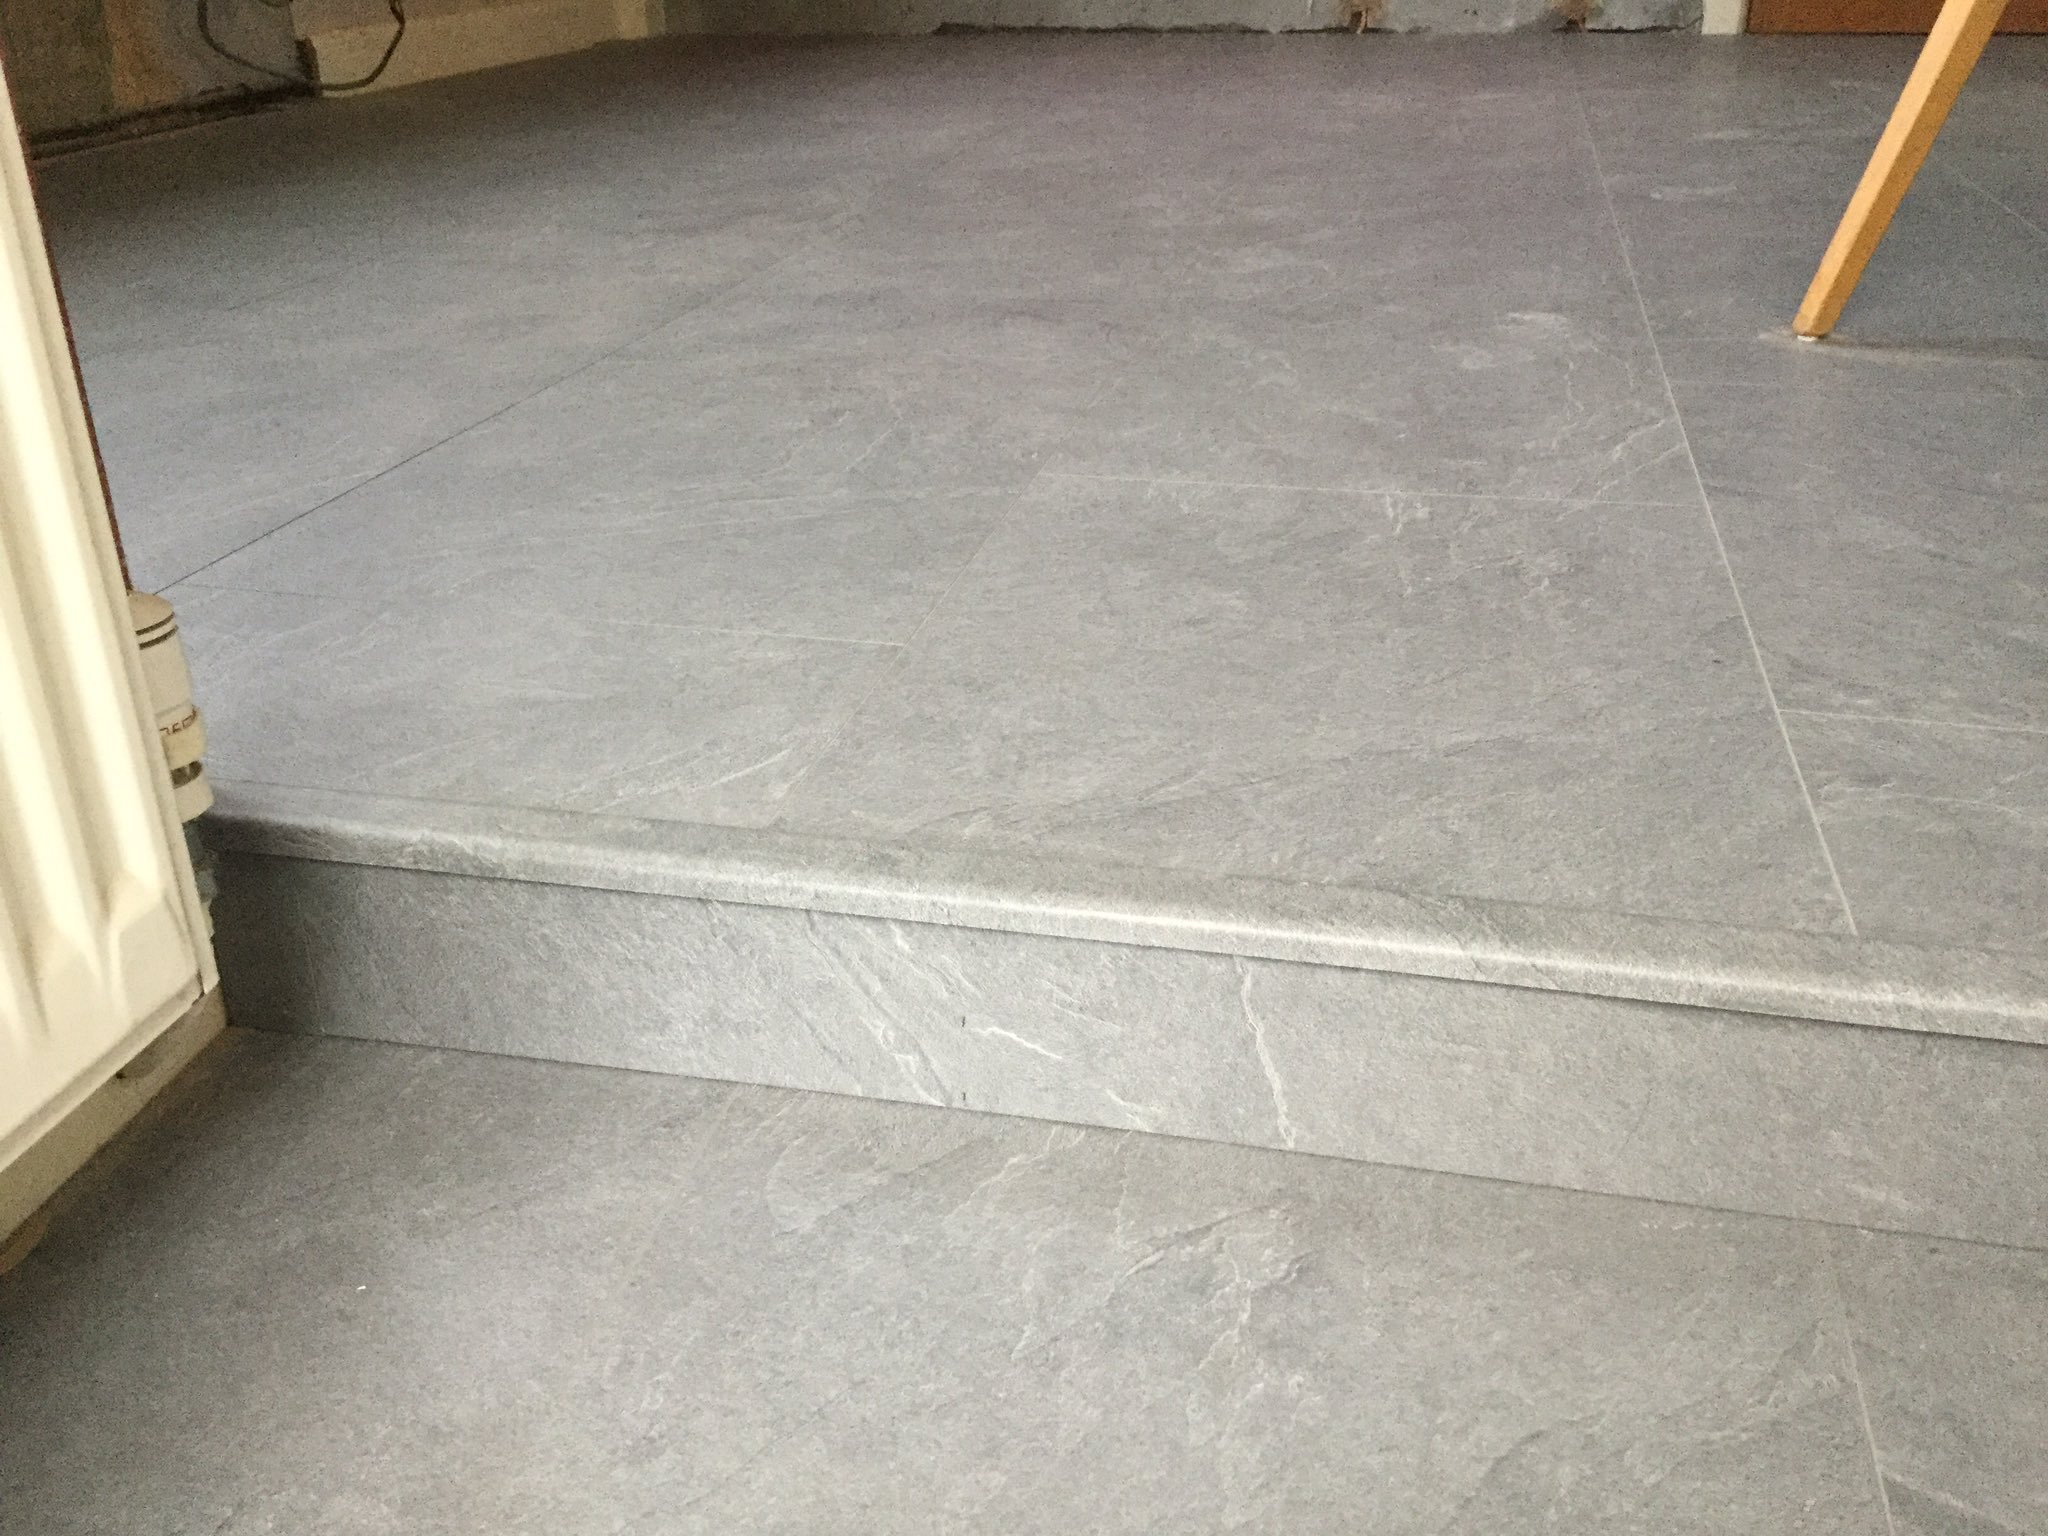 Stuart Anderson on Twitter: "Light grey pergo floor installed recently looks nice #@PergoProUK #kitchens https://t.co/EHU1AkdTx8" / Twitter